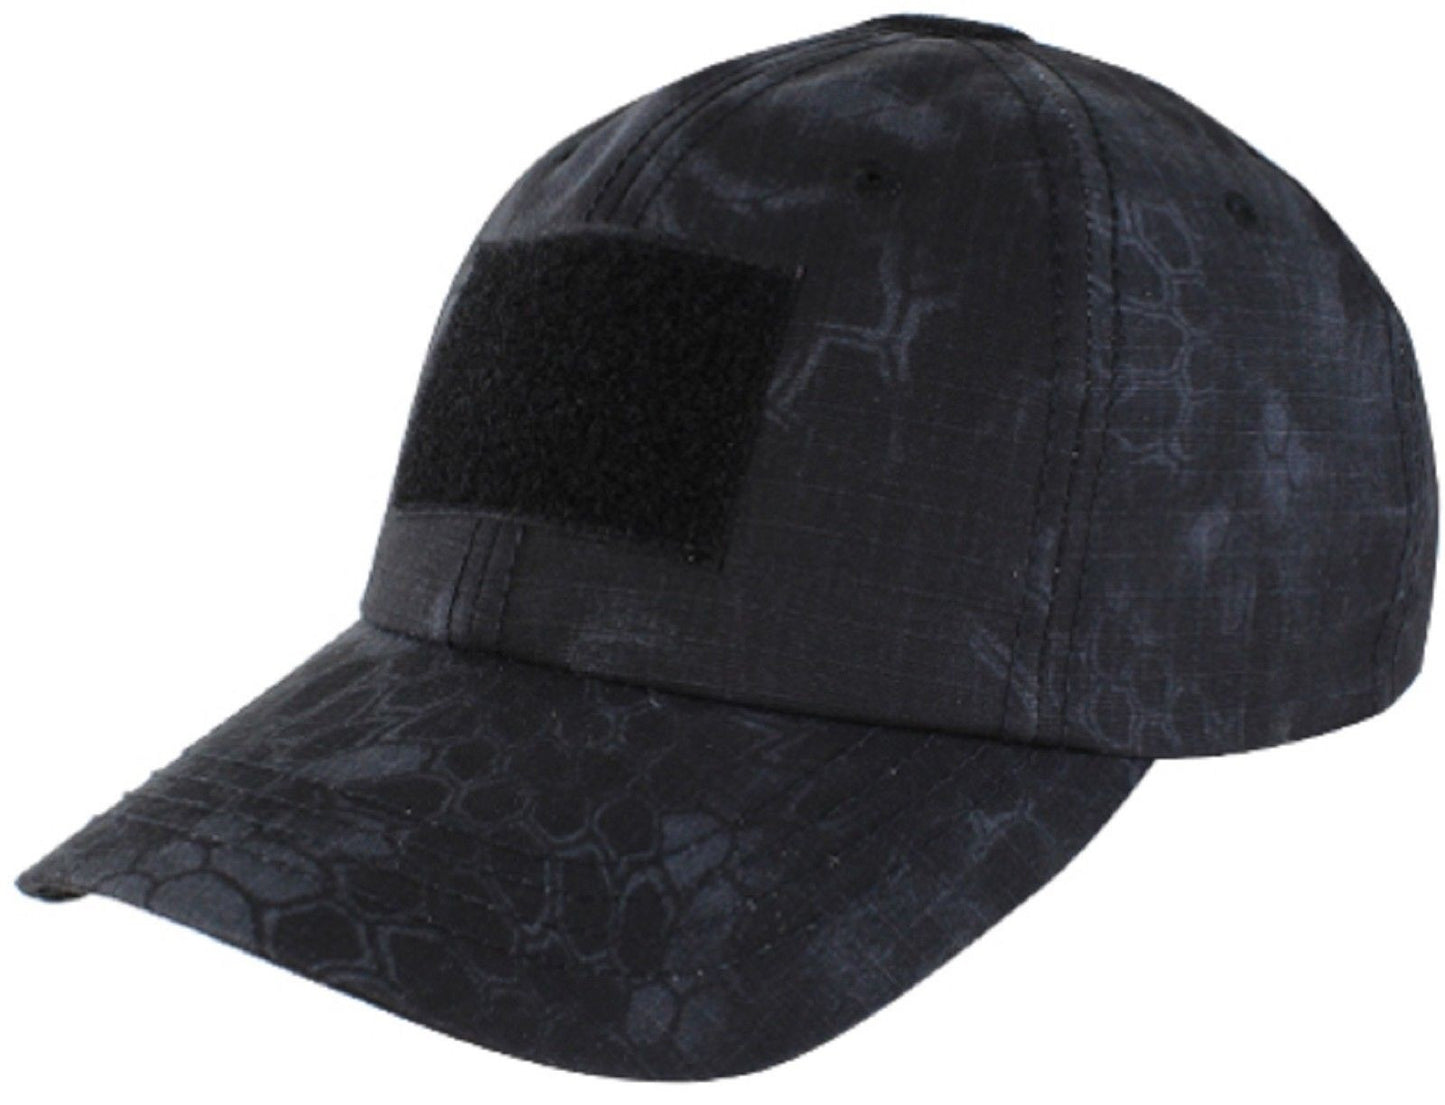 Men's Black Kryptek Typhon Baseball-Style Tactical Cap Operator Hat